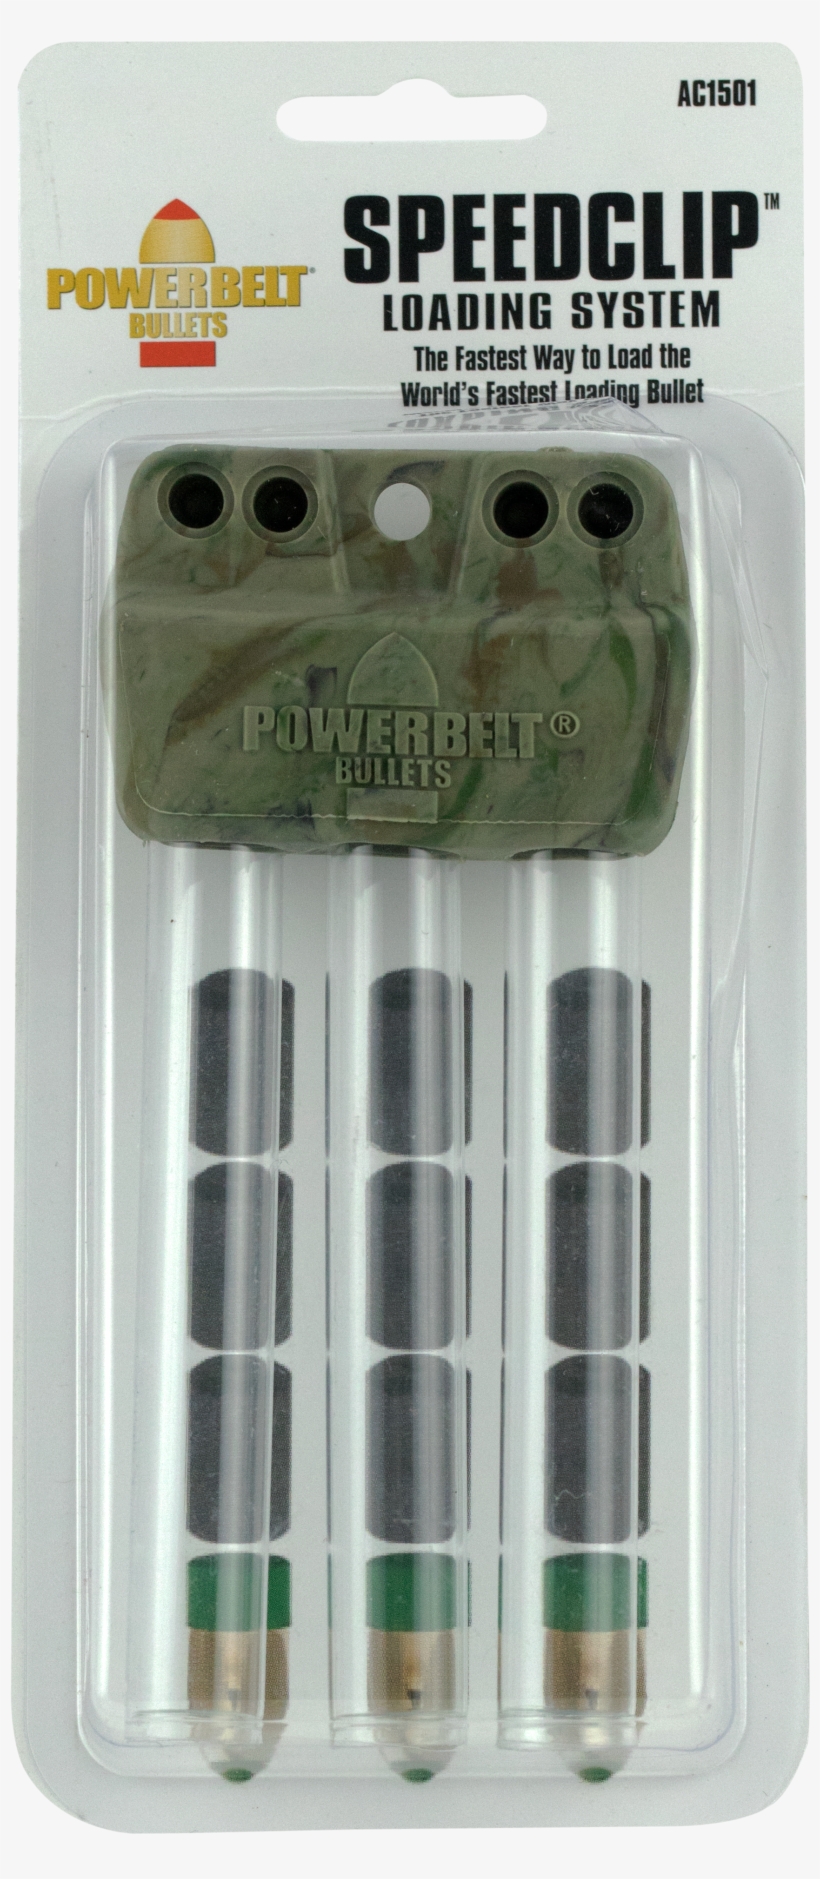 Cva Ac1501 Powerbelt Speedclip Powerbelt Bullet, Mag - Cutting Tool, transparent png #9161658